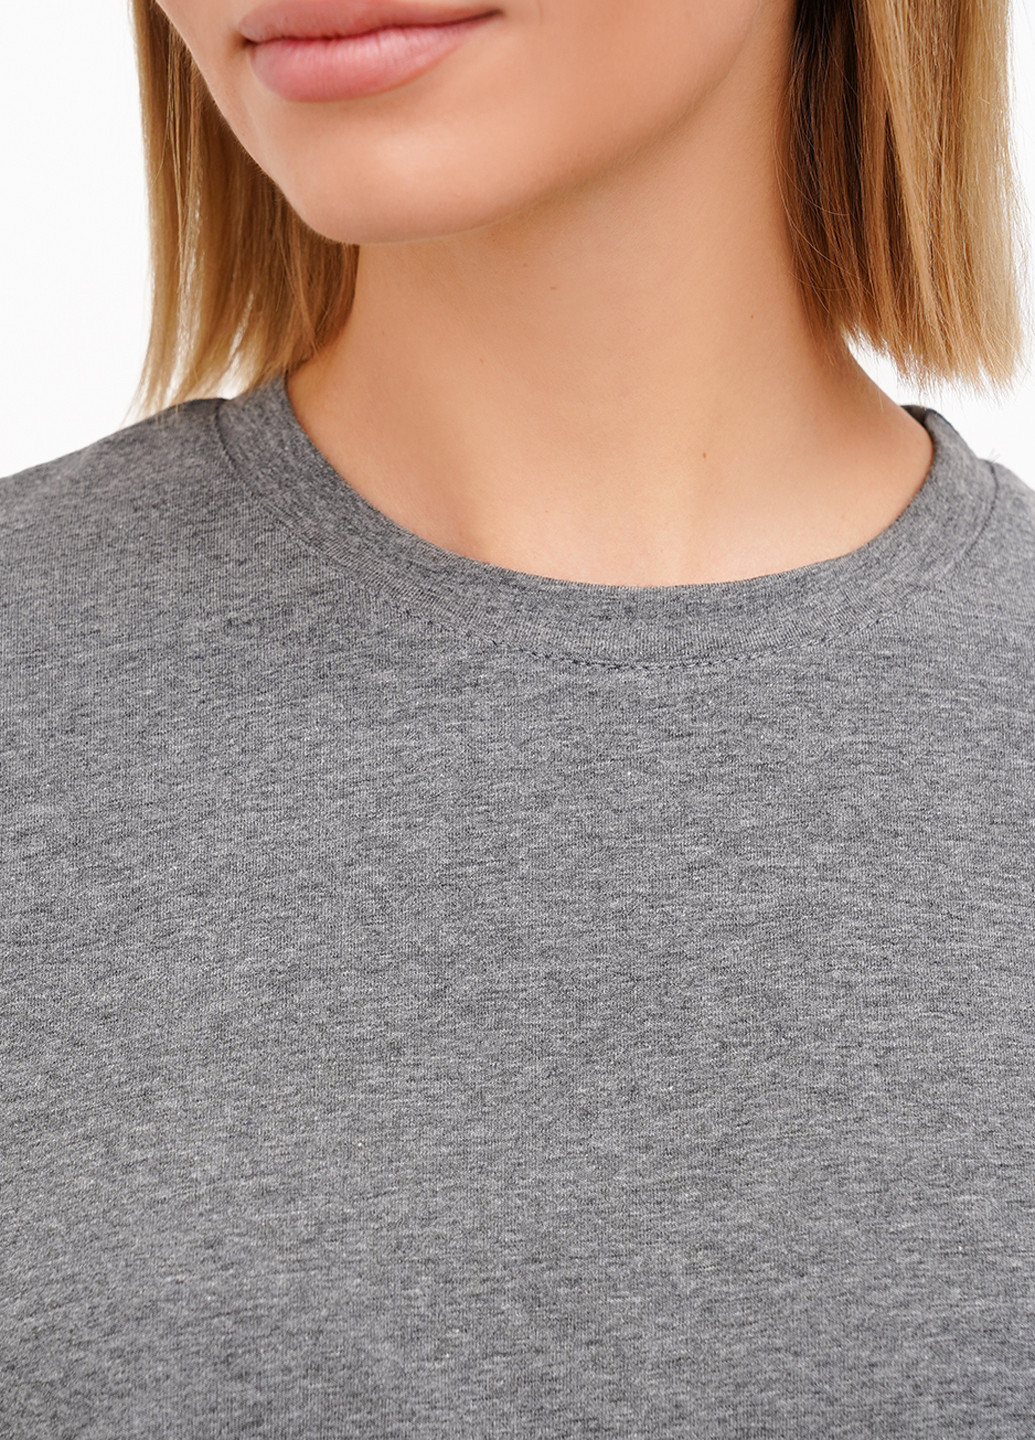 Сіра літня укорочена жіноча футболка KASTA design